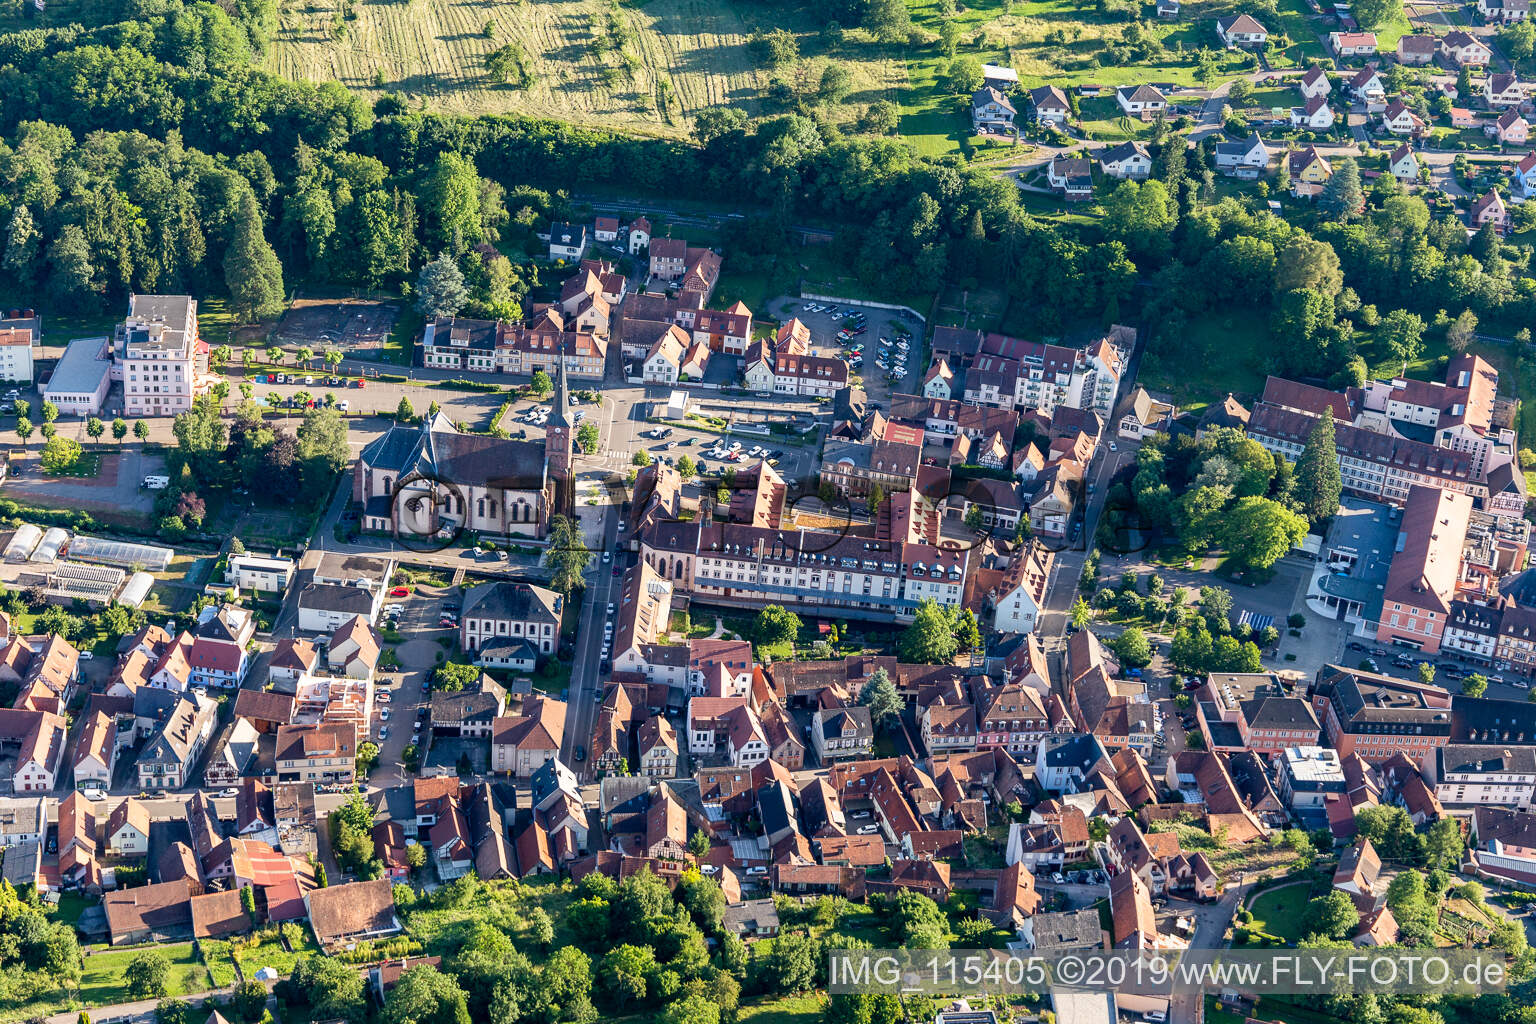 Niederbronn-les-Bains in the state Bas-Rhin, France seen from a drone